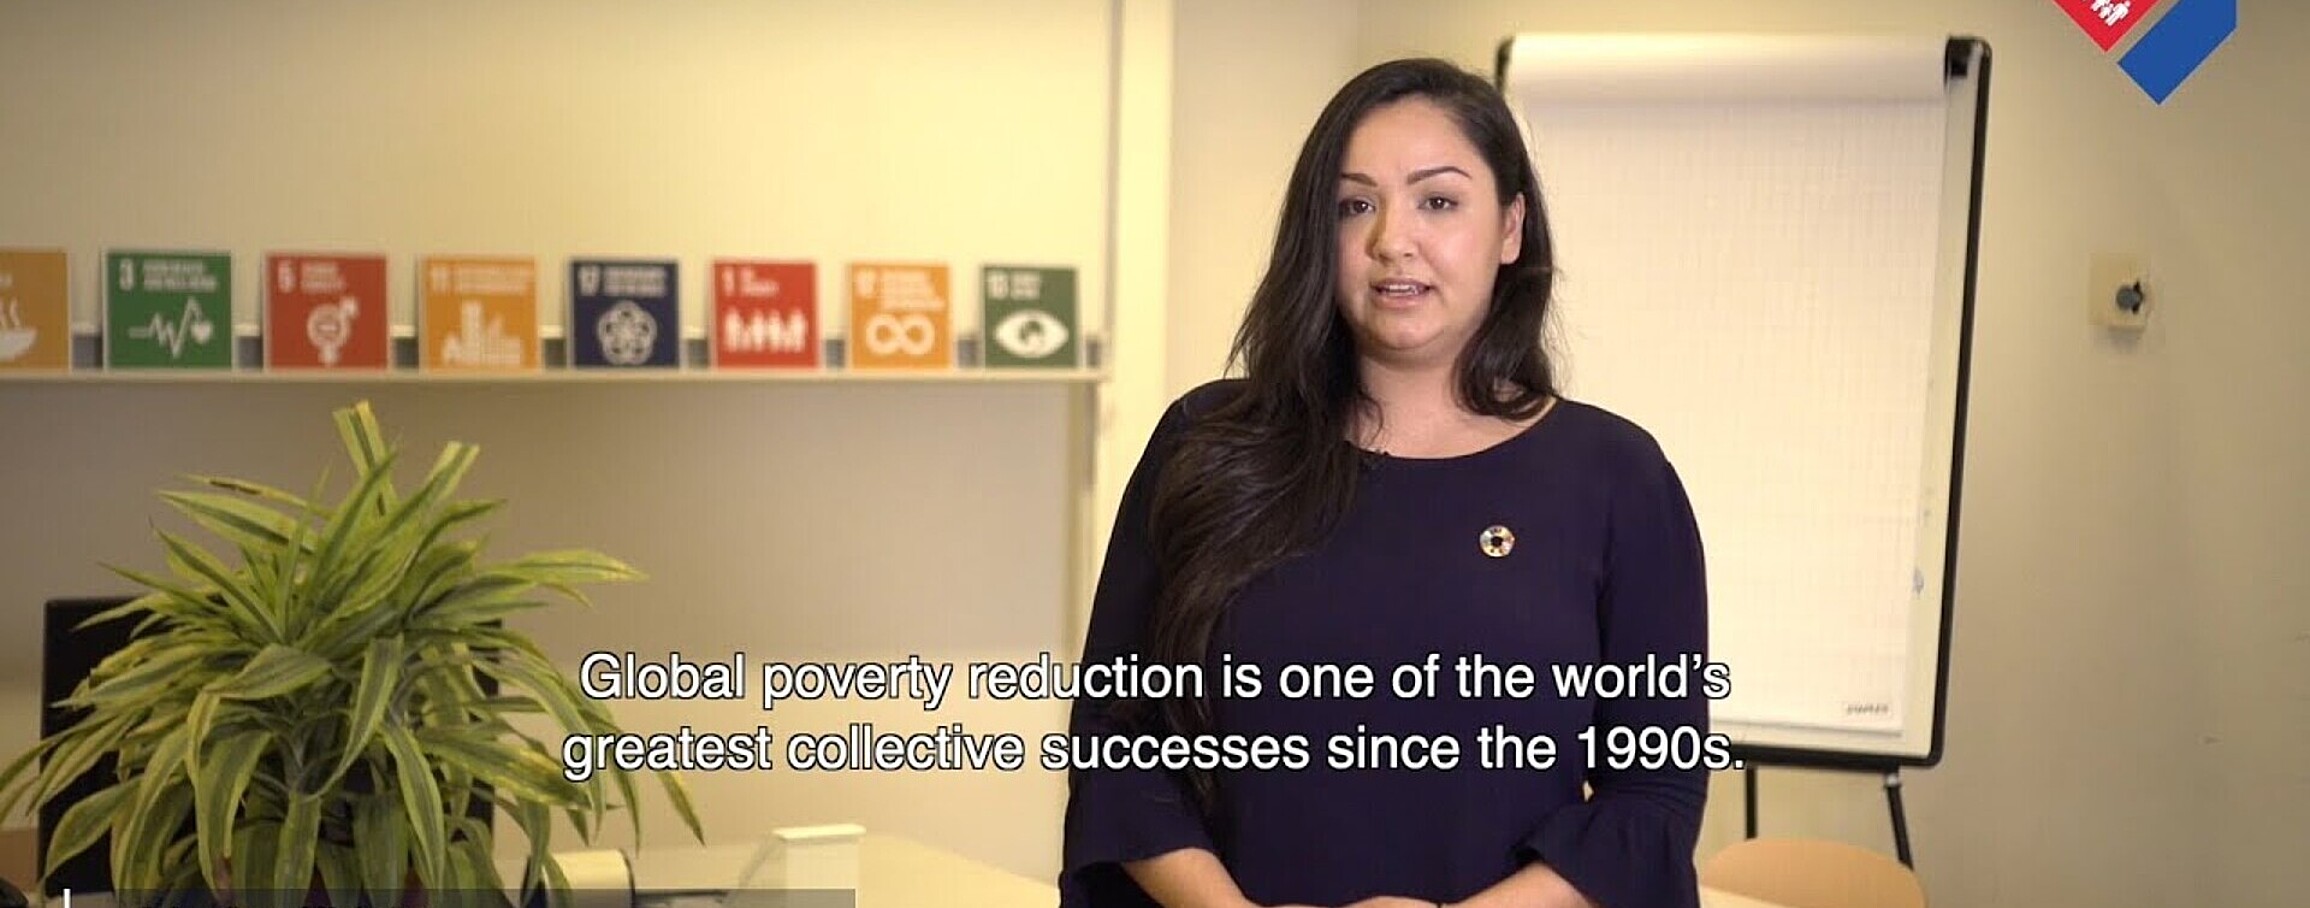 SDG 1: Explaining no poverty  